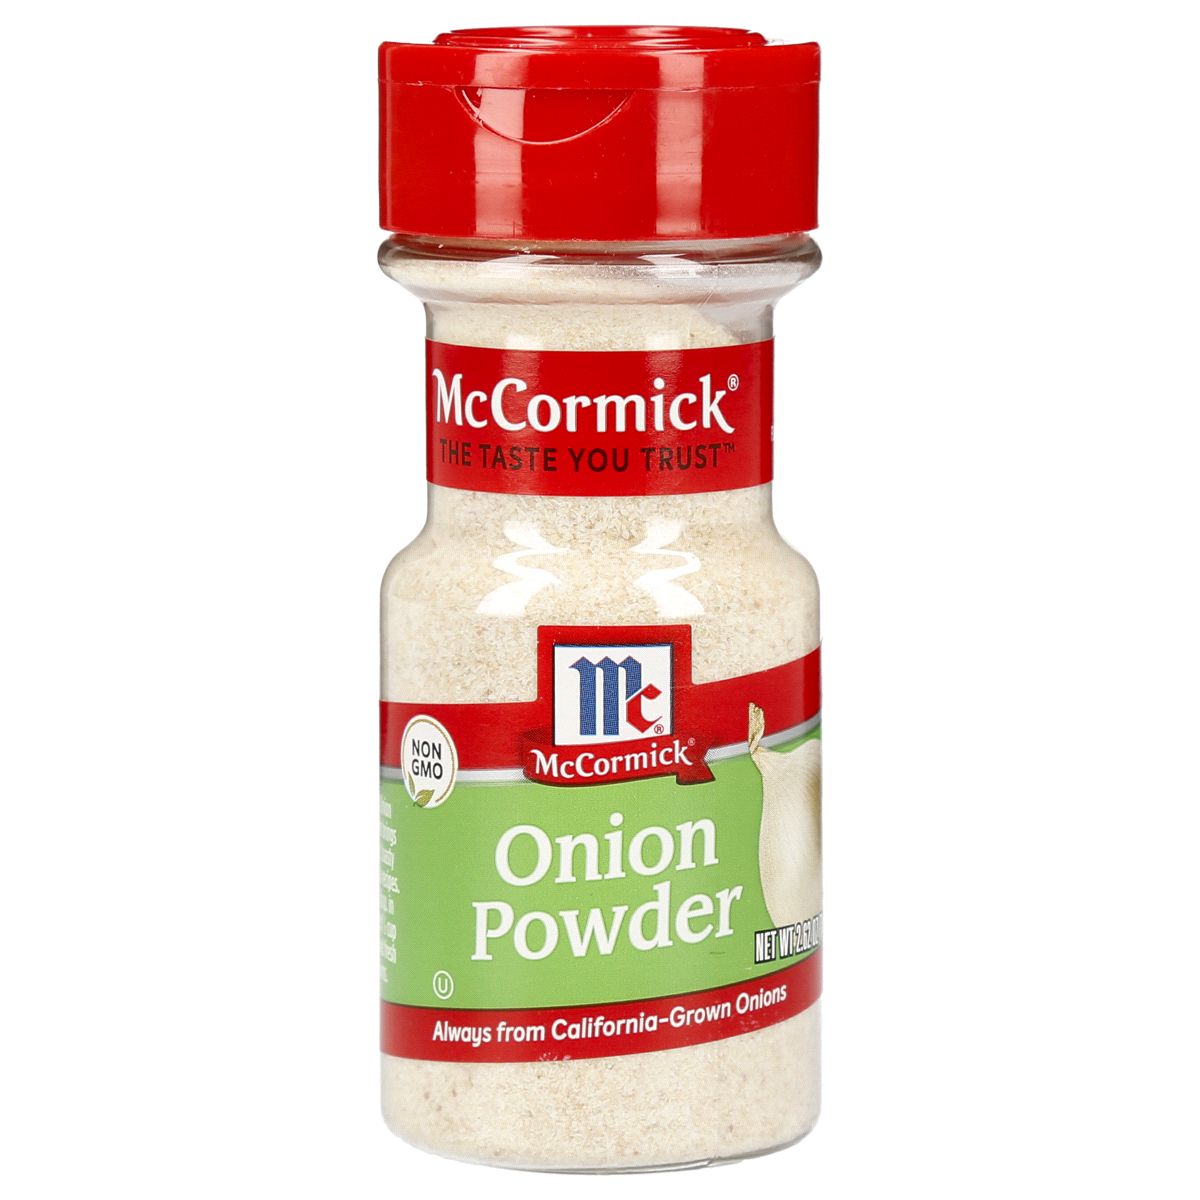 McCORMICK Onion Powder 2.62 oz